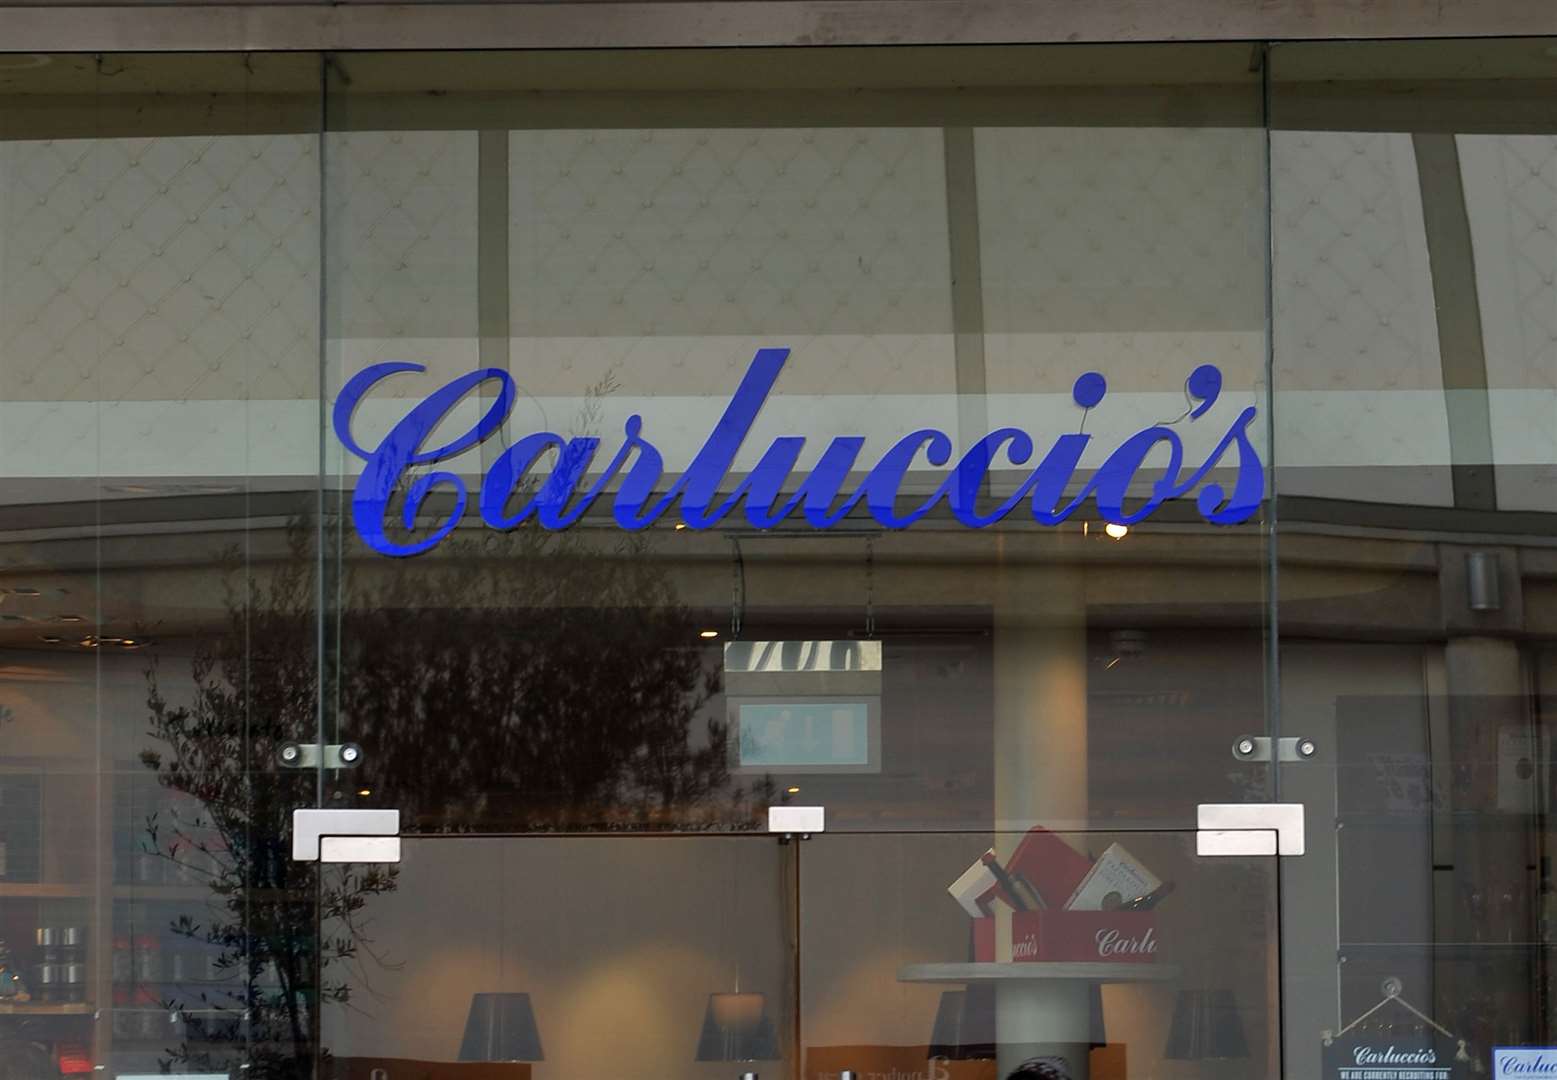 A Carluccio's restaurant sign